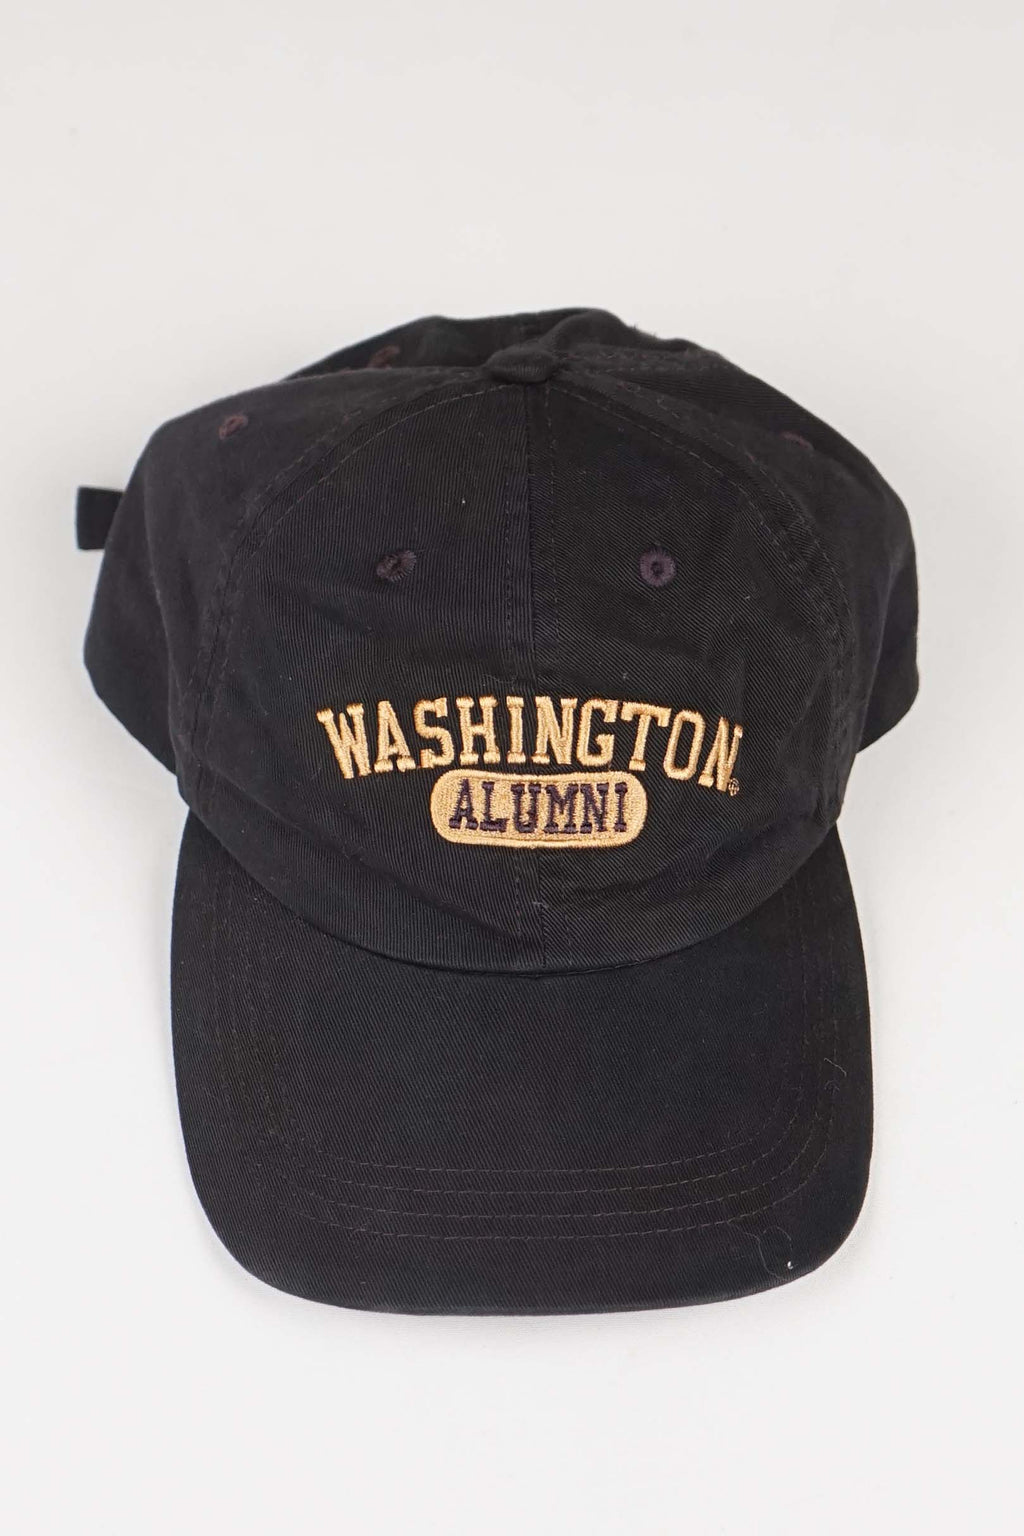 VINTAGE WASHINGTON ALUMNI HAT